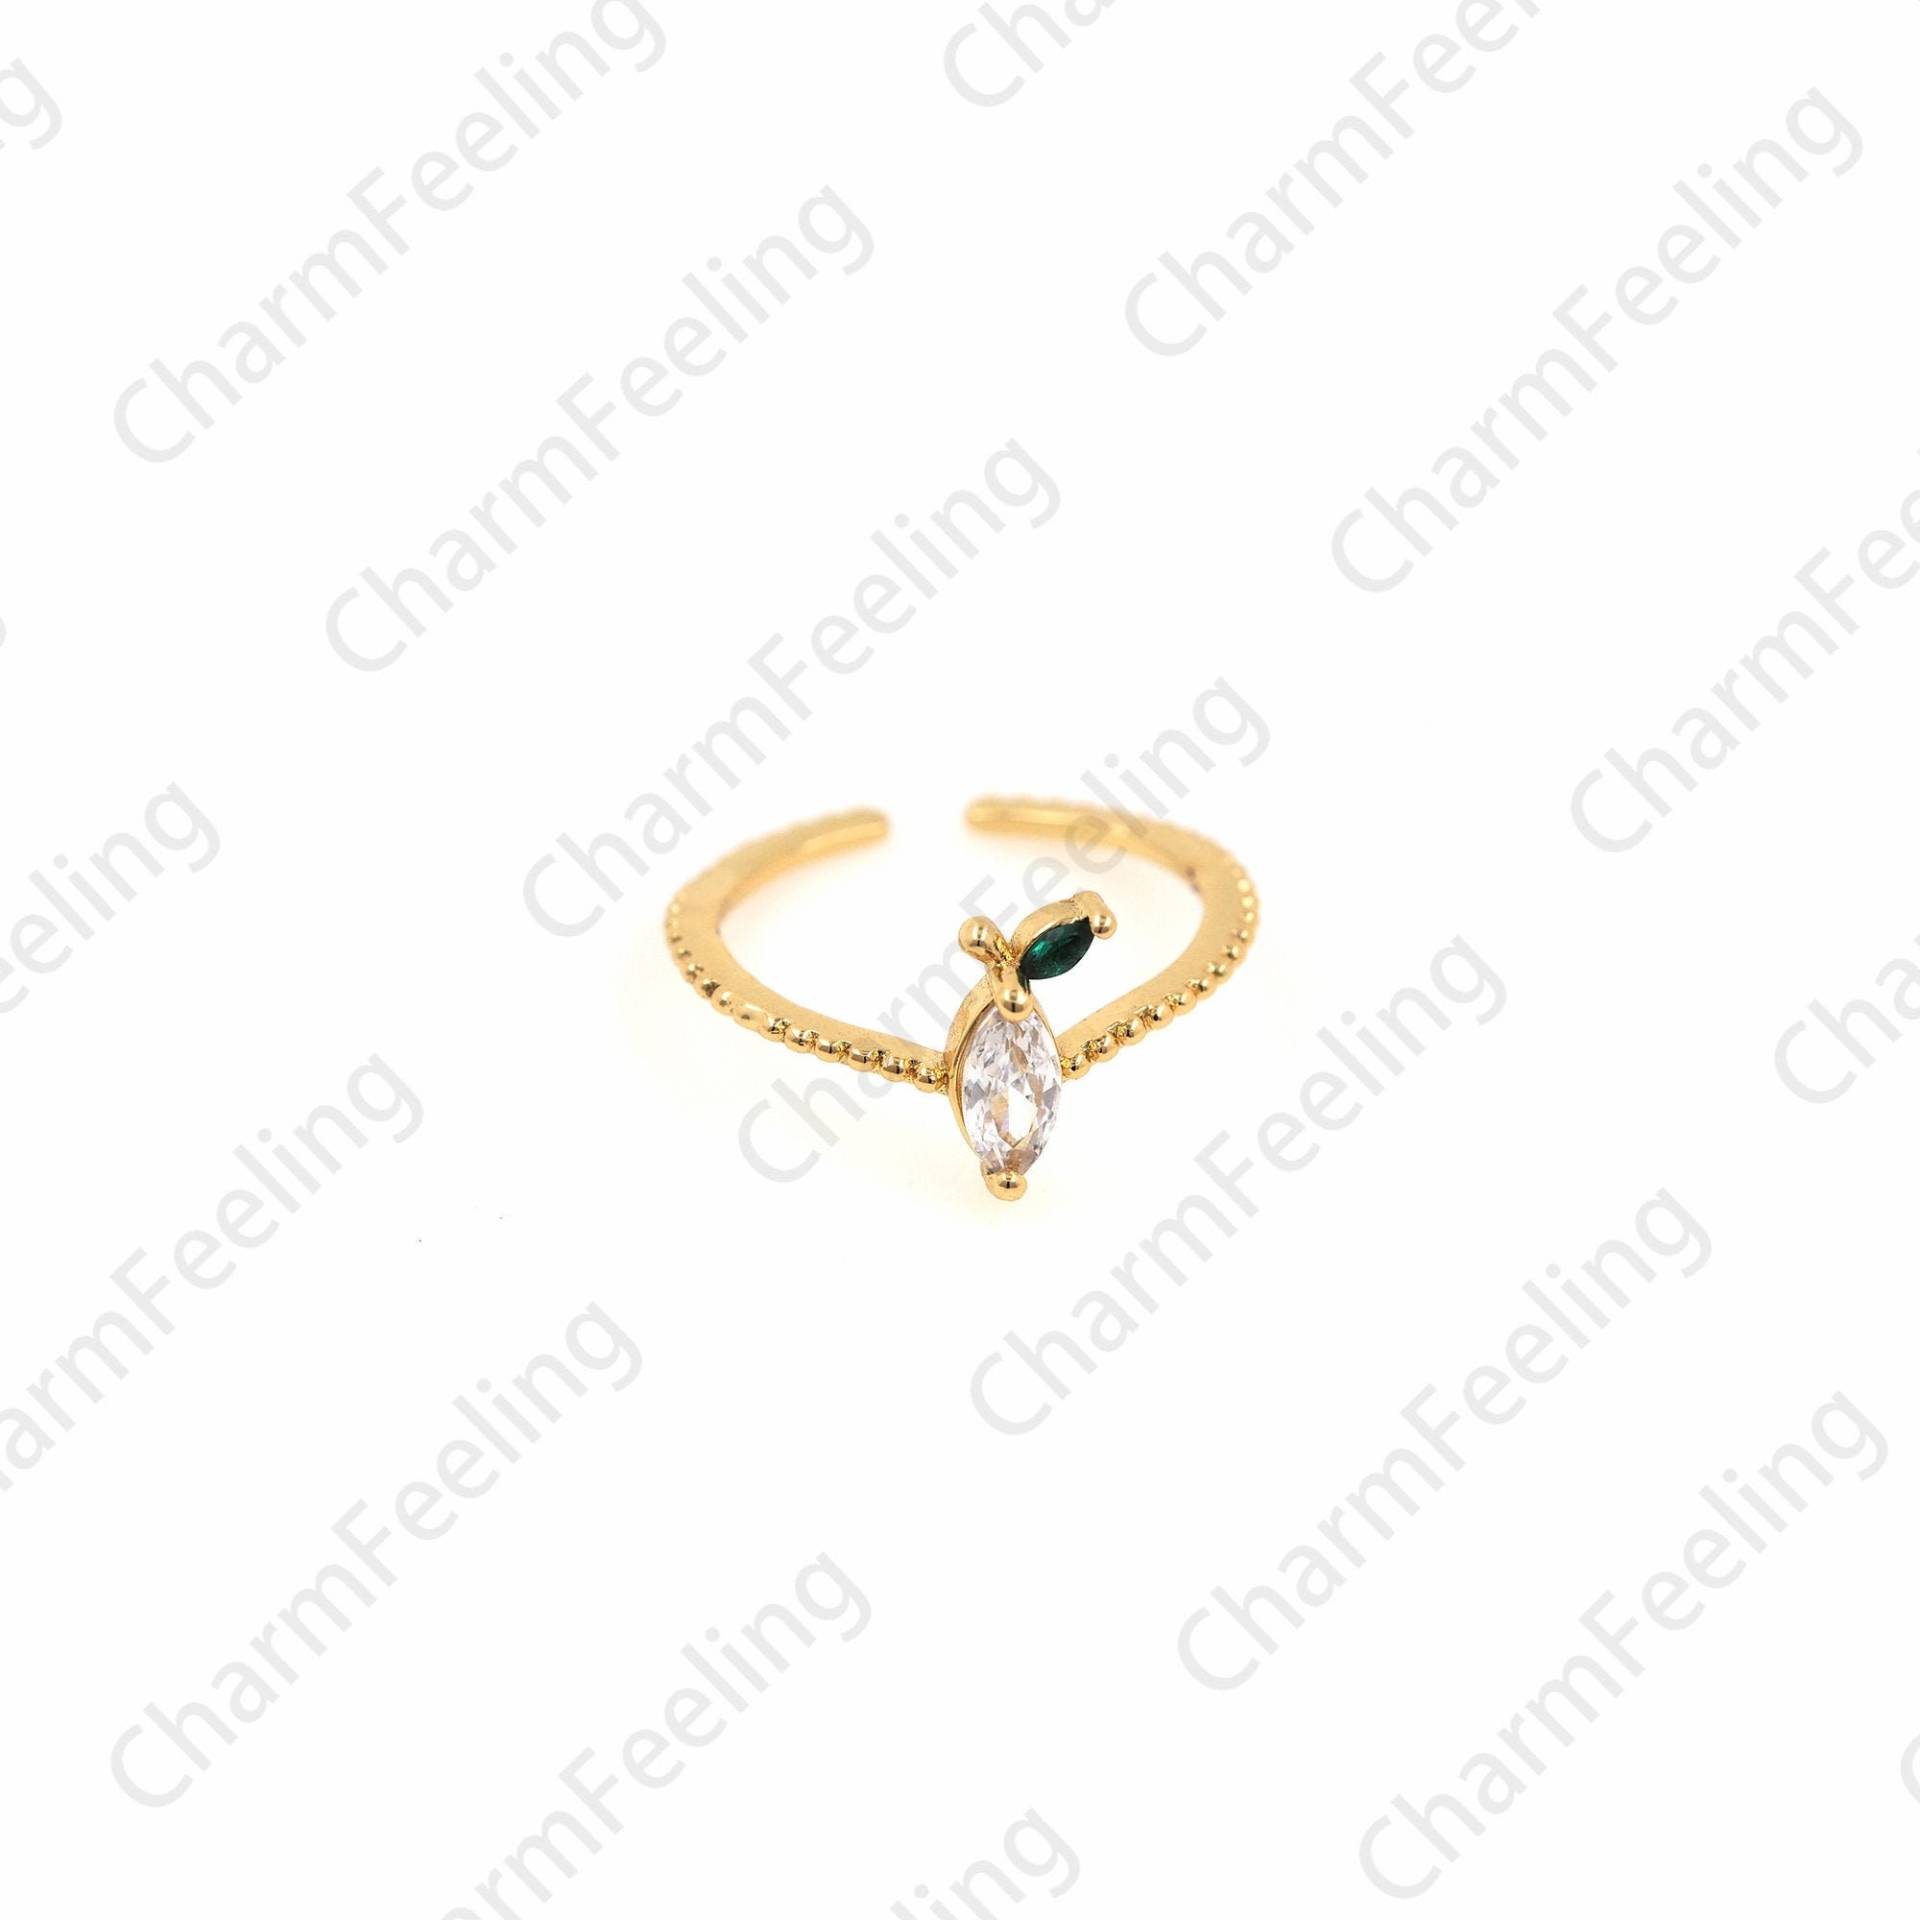 18K Gold Filled Obst Ring, Zarter Micropavé Cz Charm, Verstellbarer Offener Ring 1stk von CharmFeeling